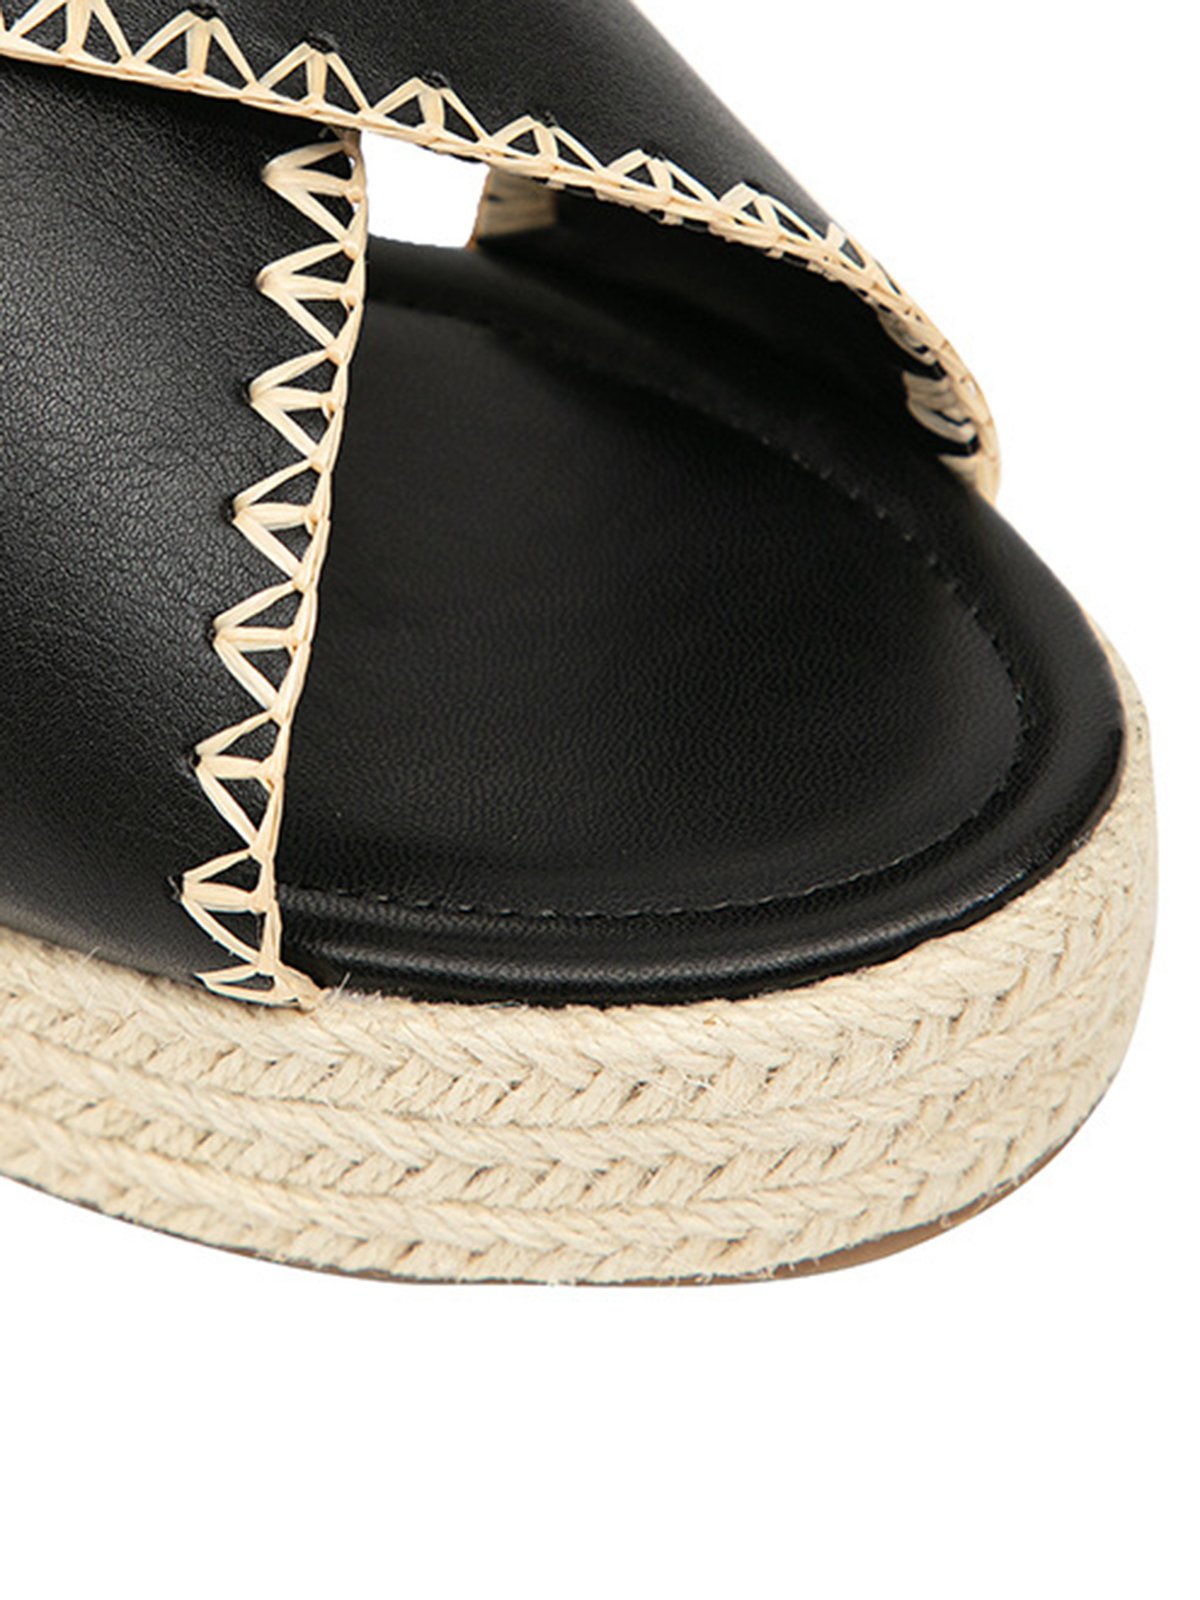 Criss Cross Stitching Adjustable Buckle Wedge Espadrille Sandals